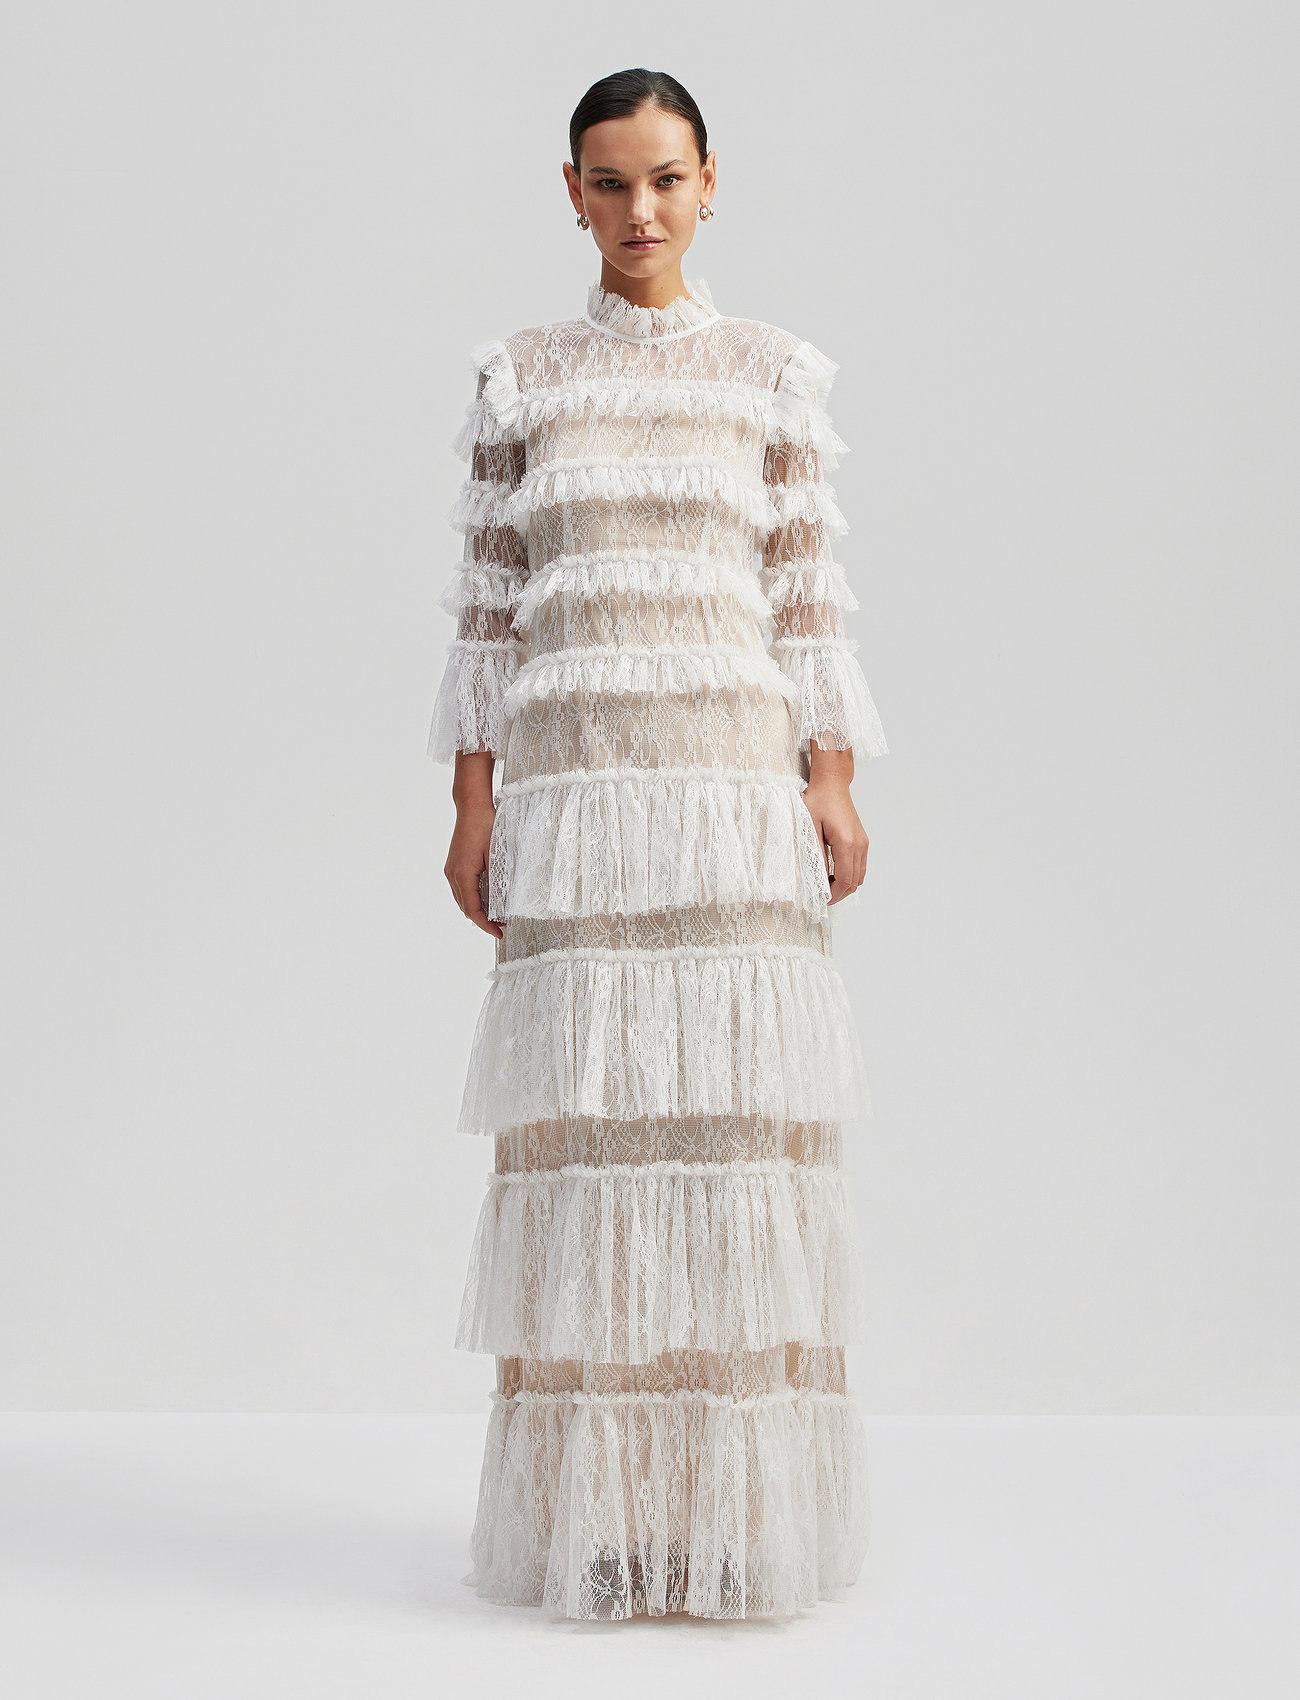 Malina - Carmine long sleeve maxi lace dress - sukienki wieczorowe - cloudy white - 0